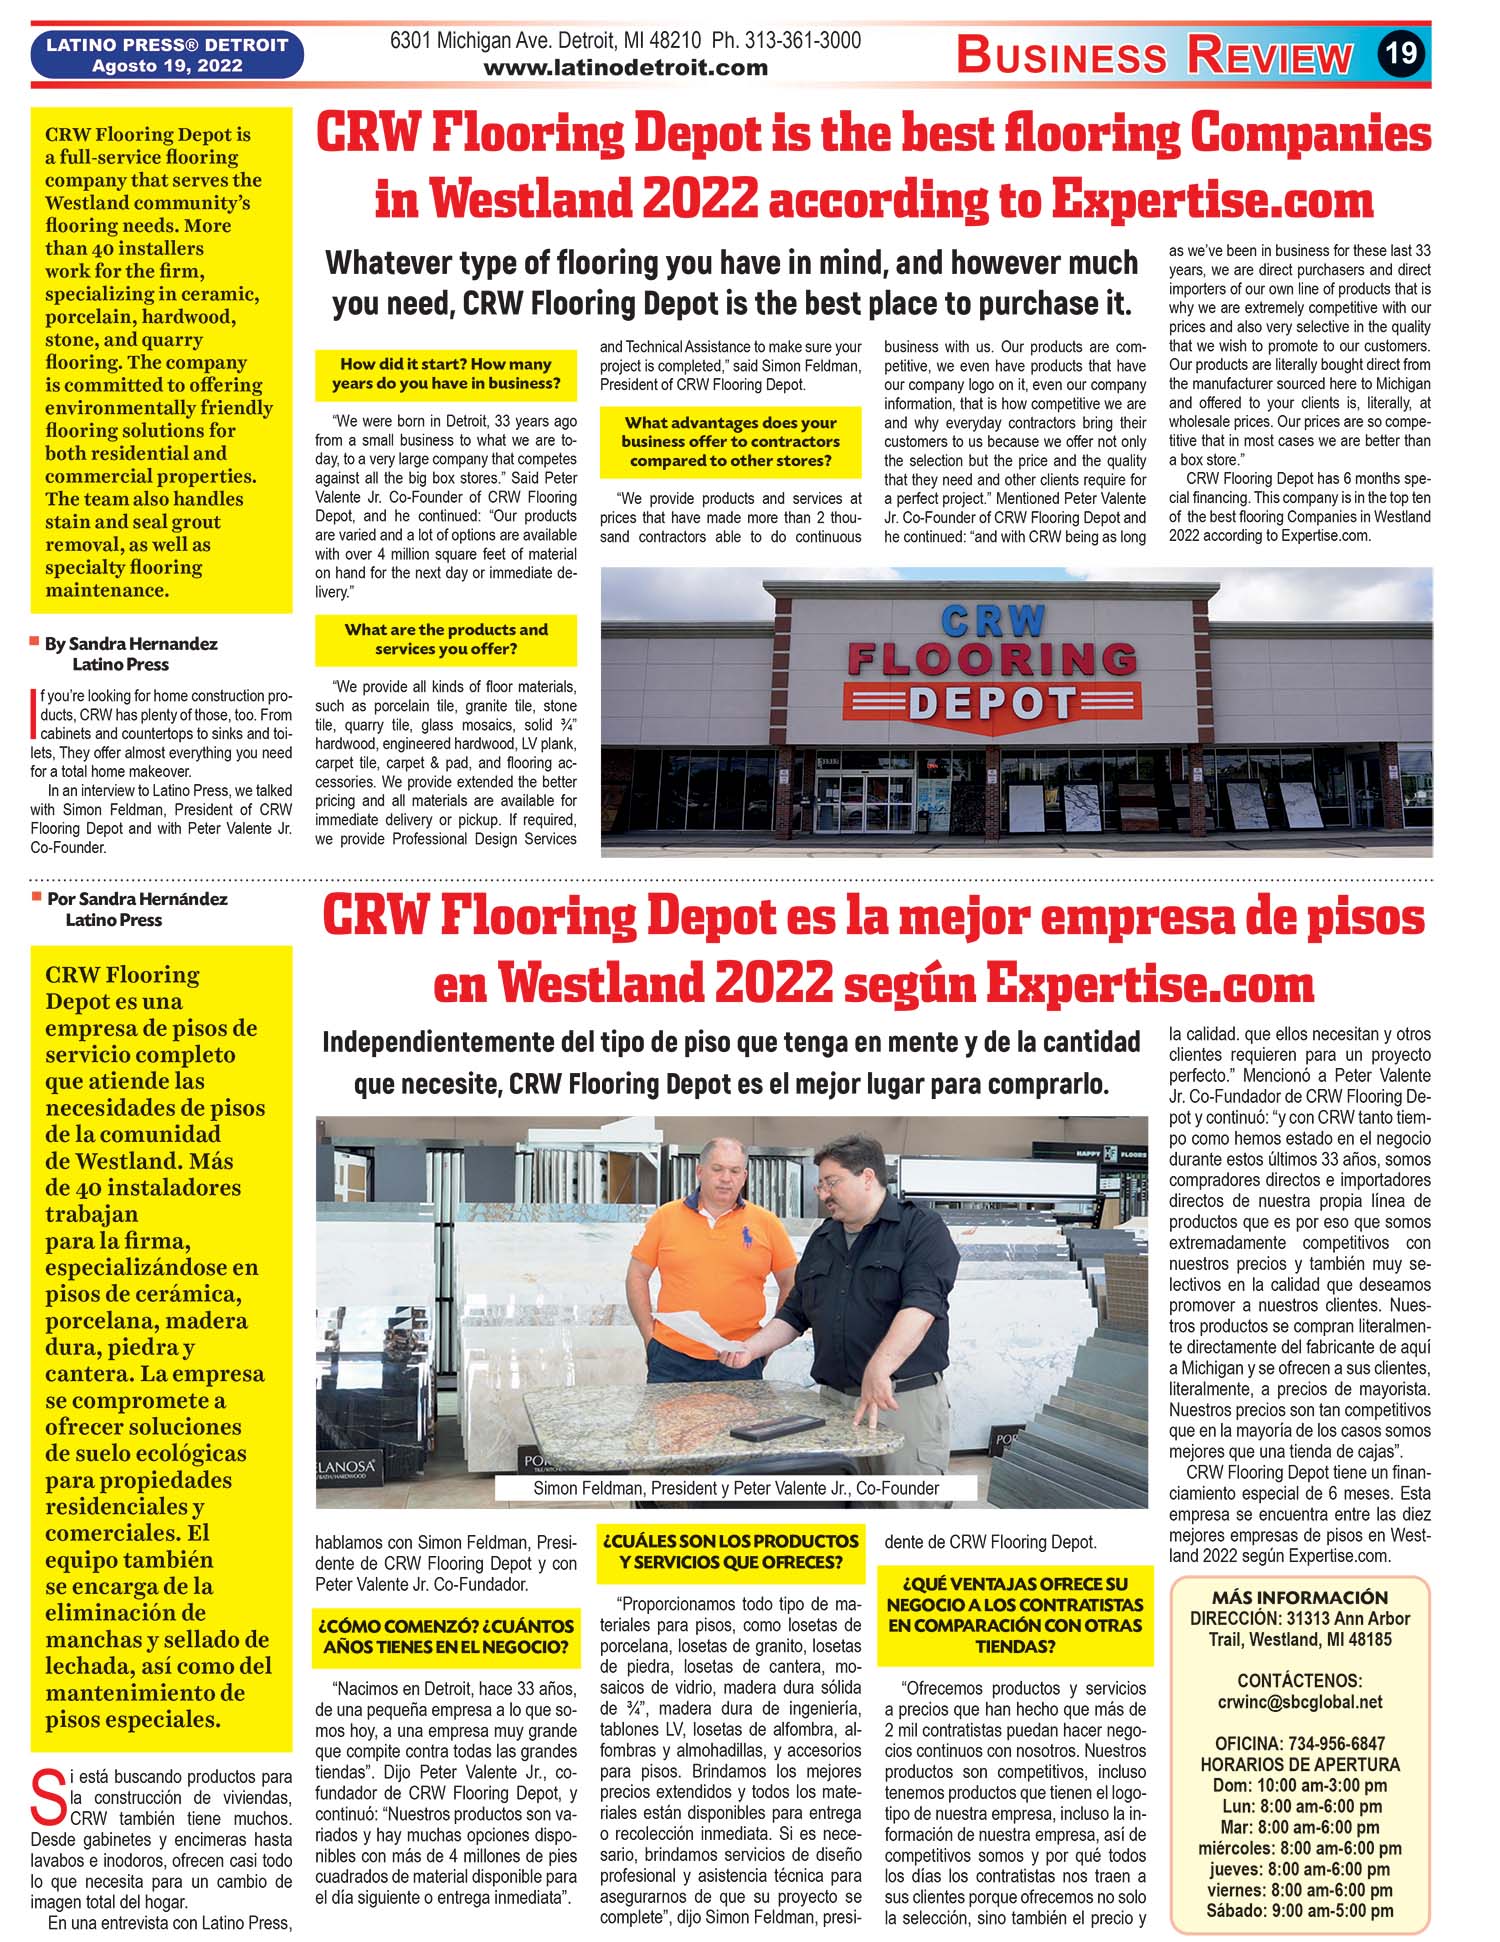 Crw Flooring Depot News